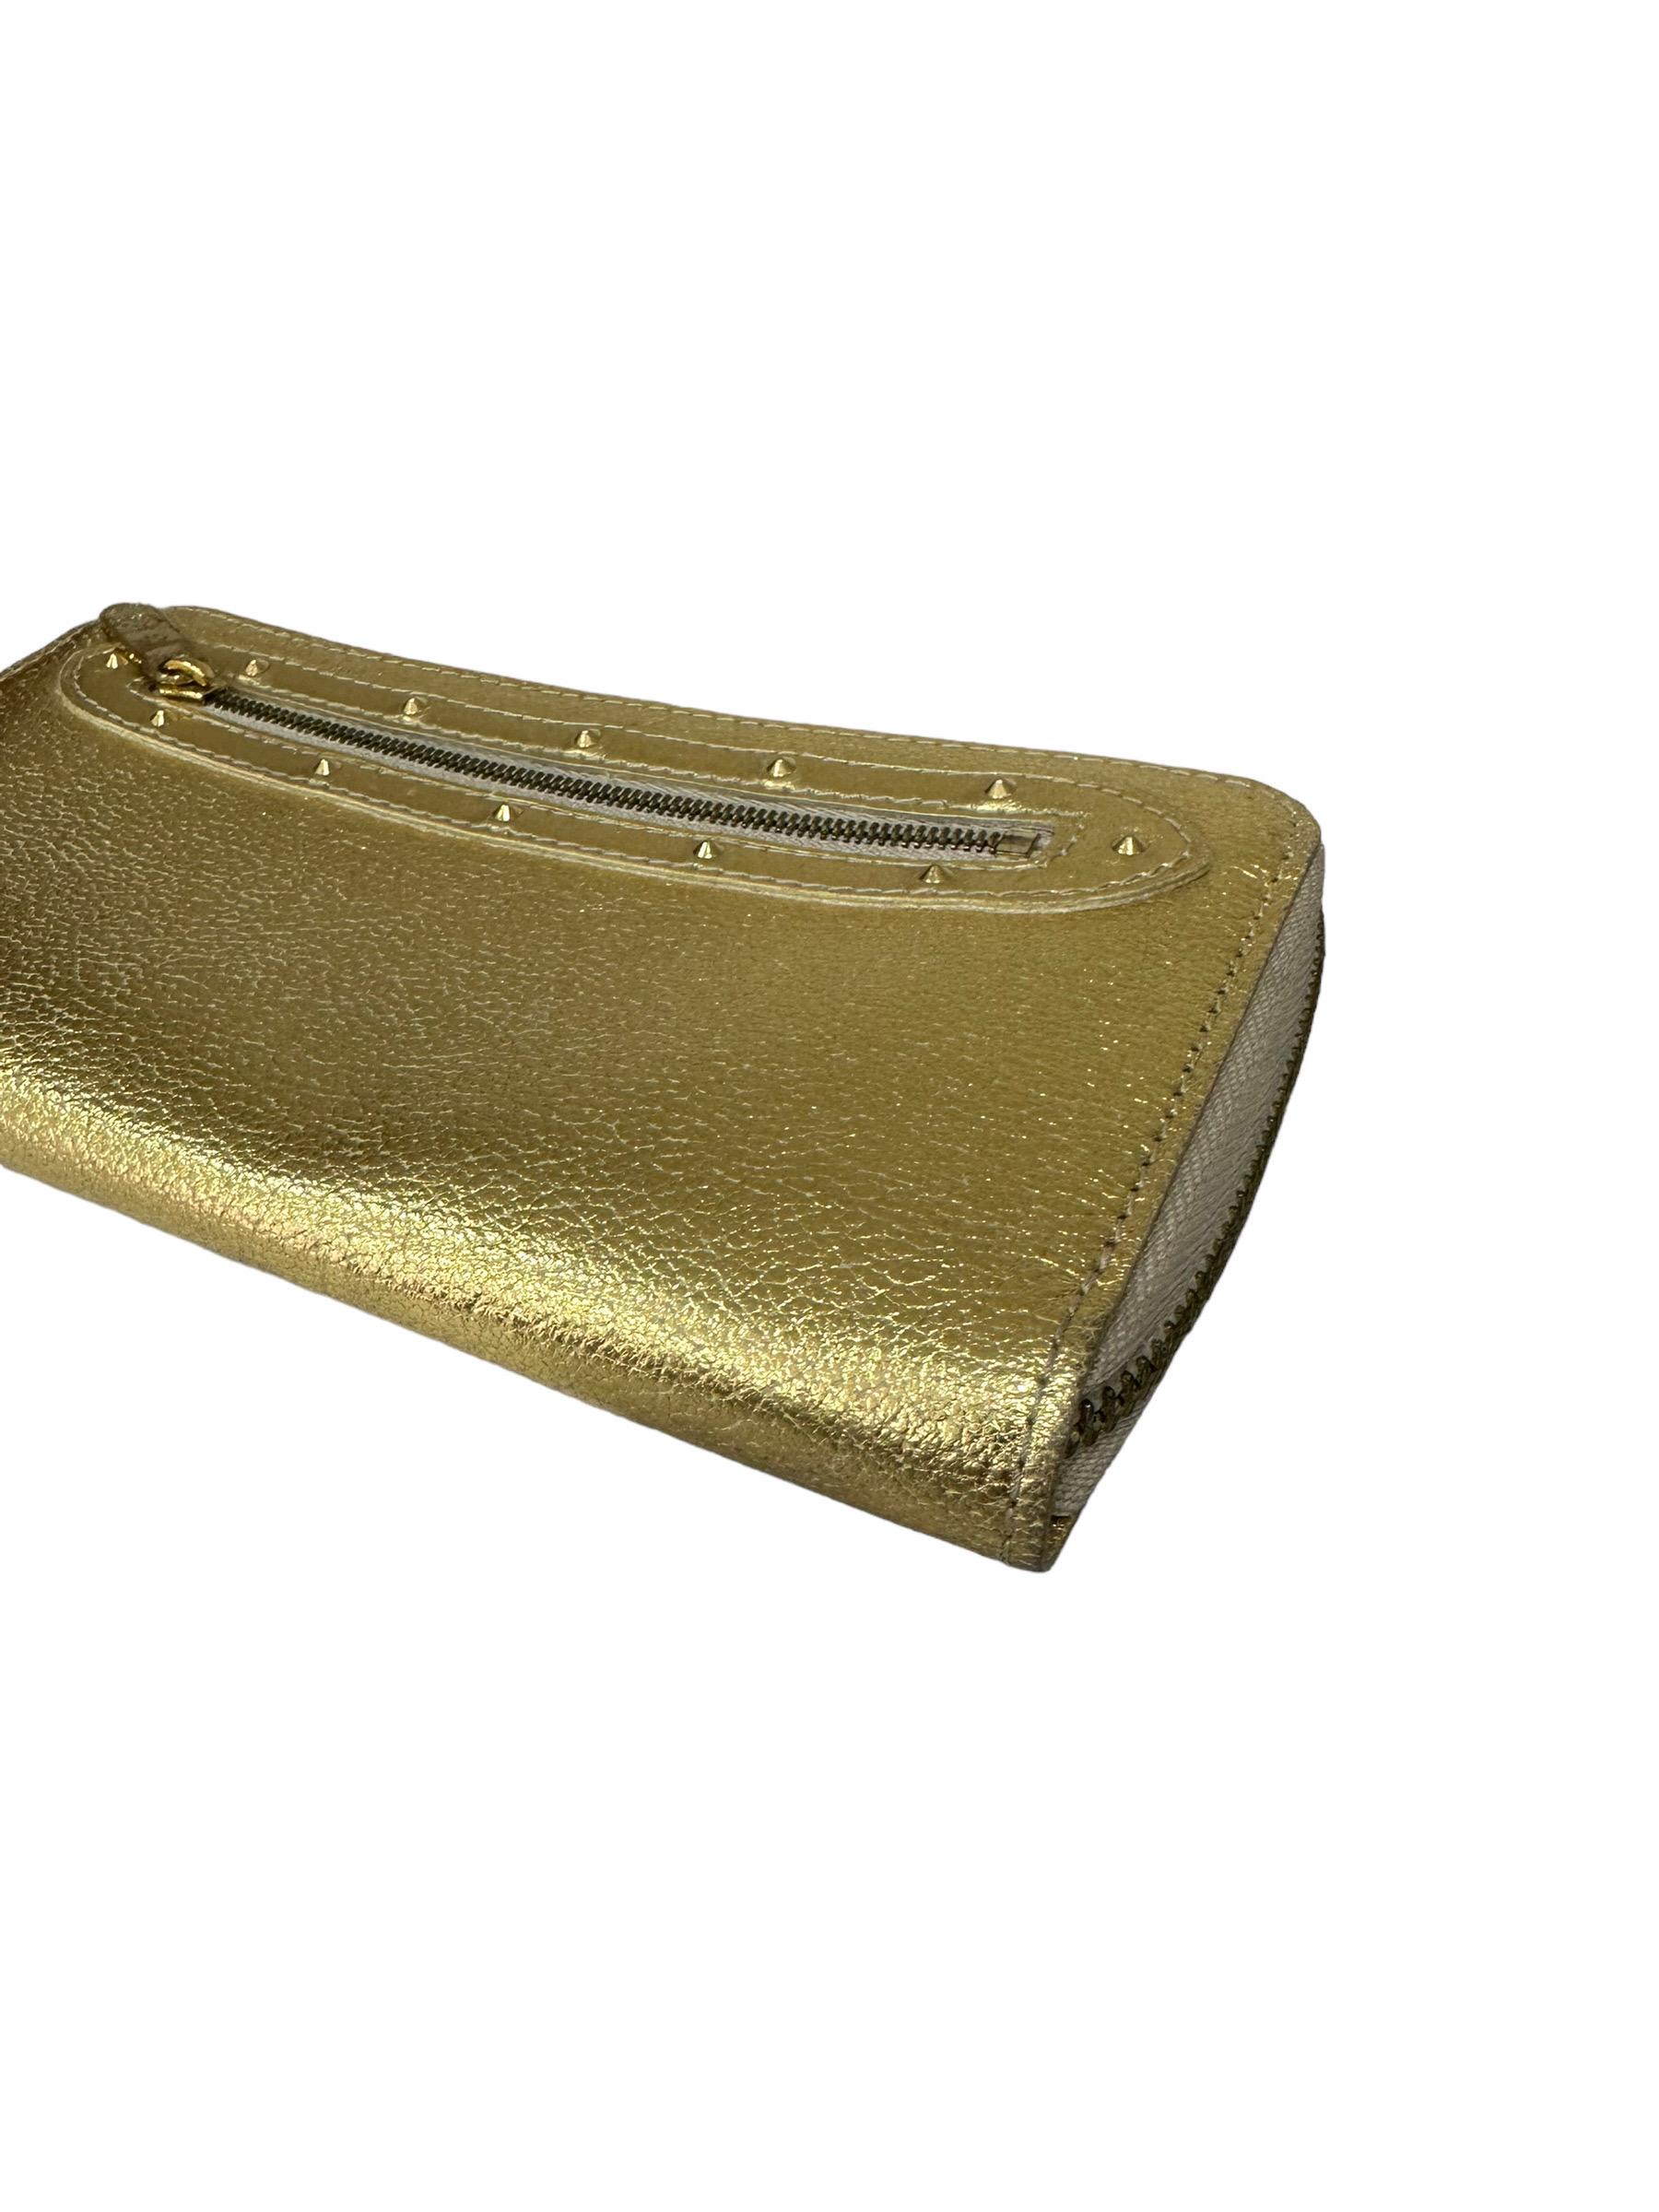 Louis Vuitton Zippy Suhali Wallet Gold Leather  For Sale 4